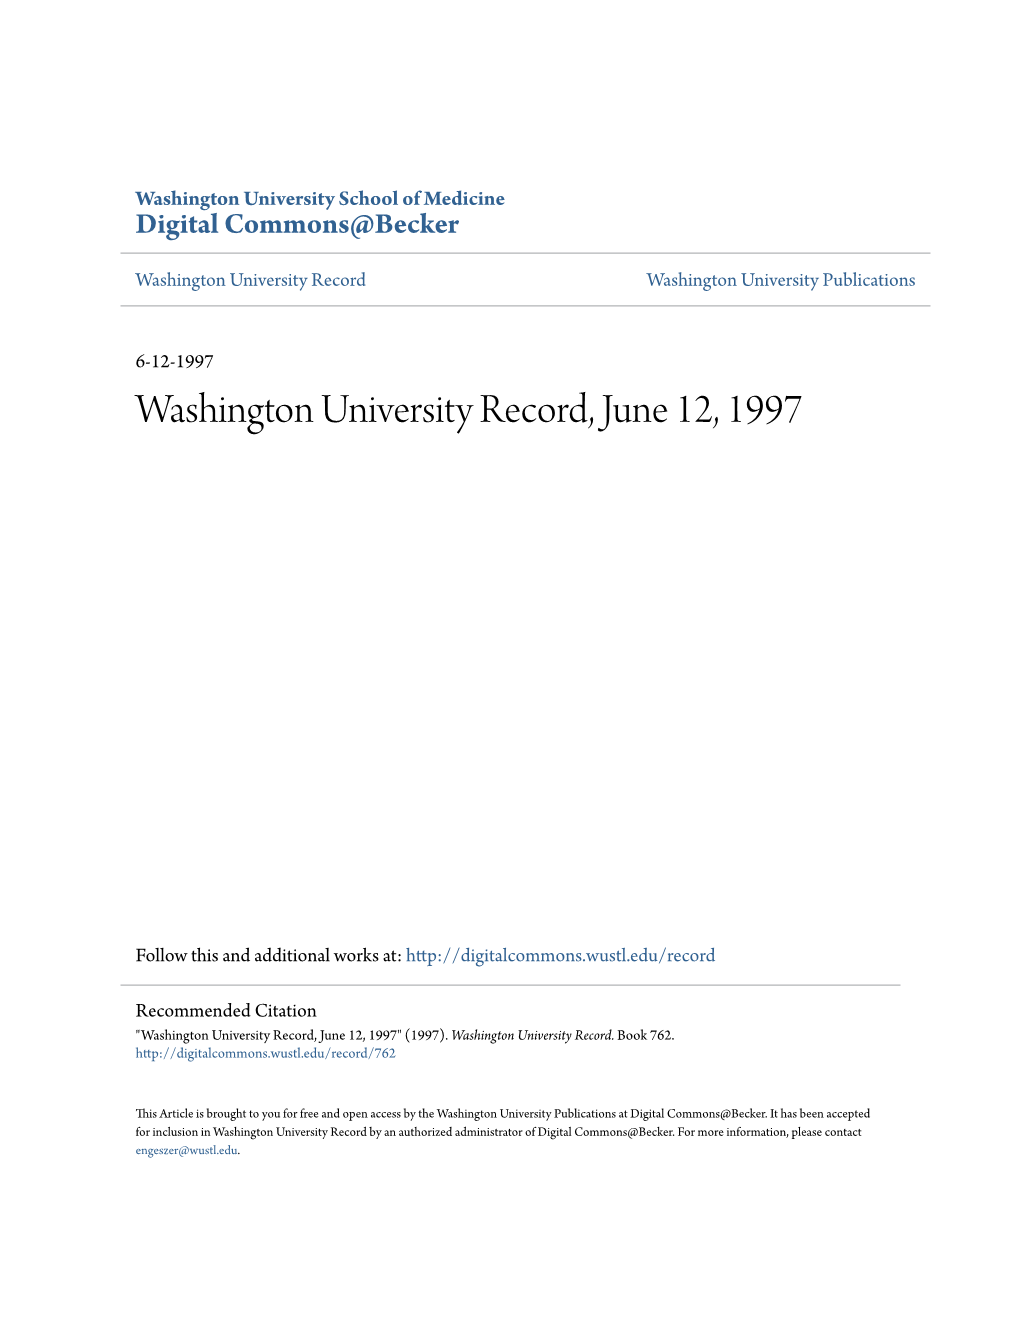 Washington University Record, June 12, 1997